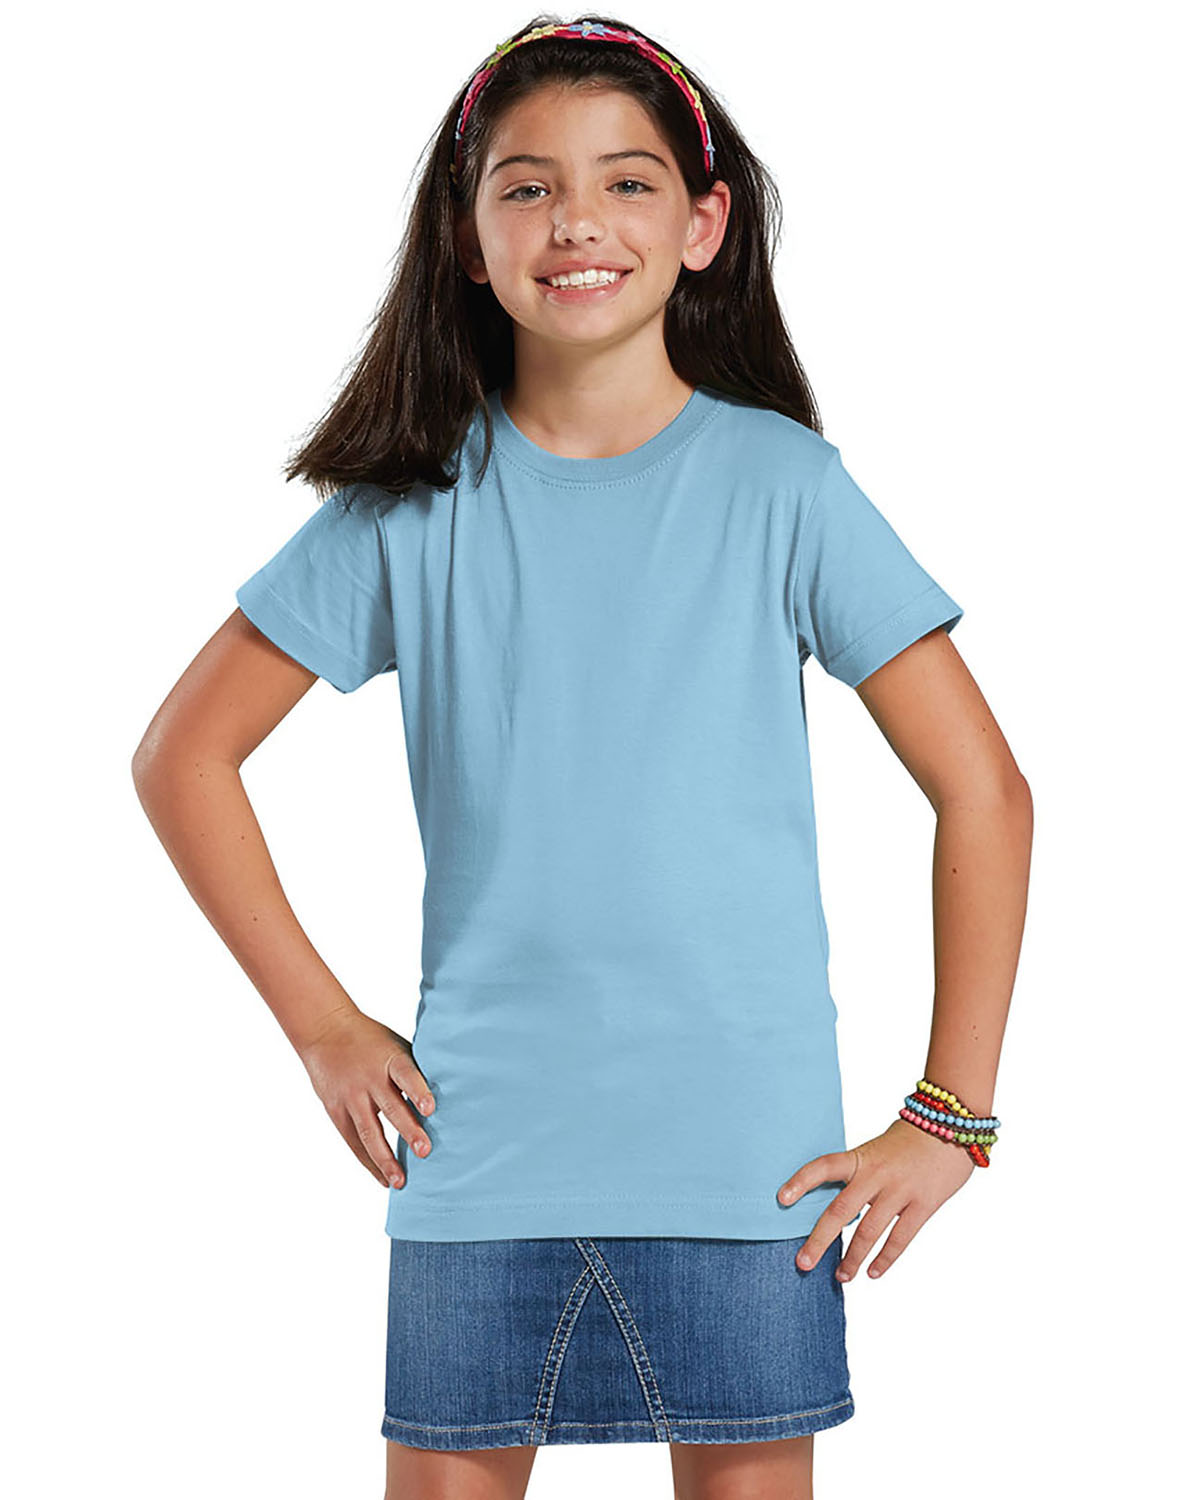 L.A.T Sportswear 2616 Girls' Longer Length T-Shirt $5.06 - T-Shirts